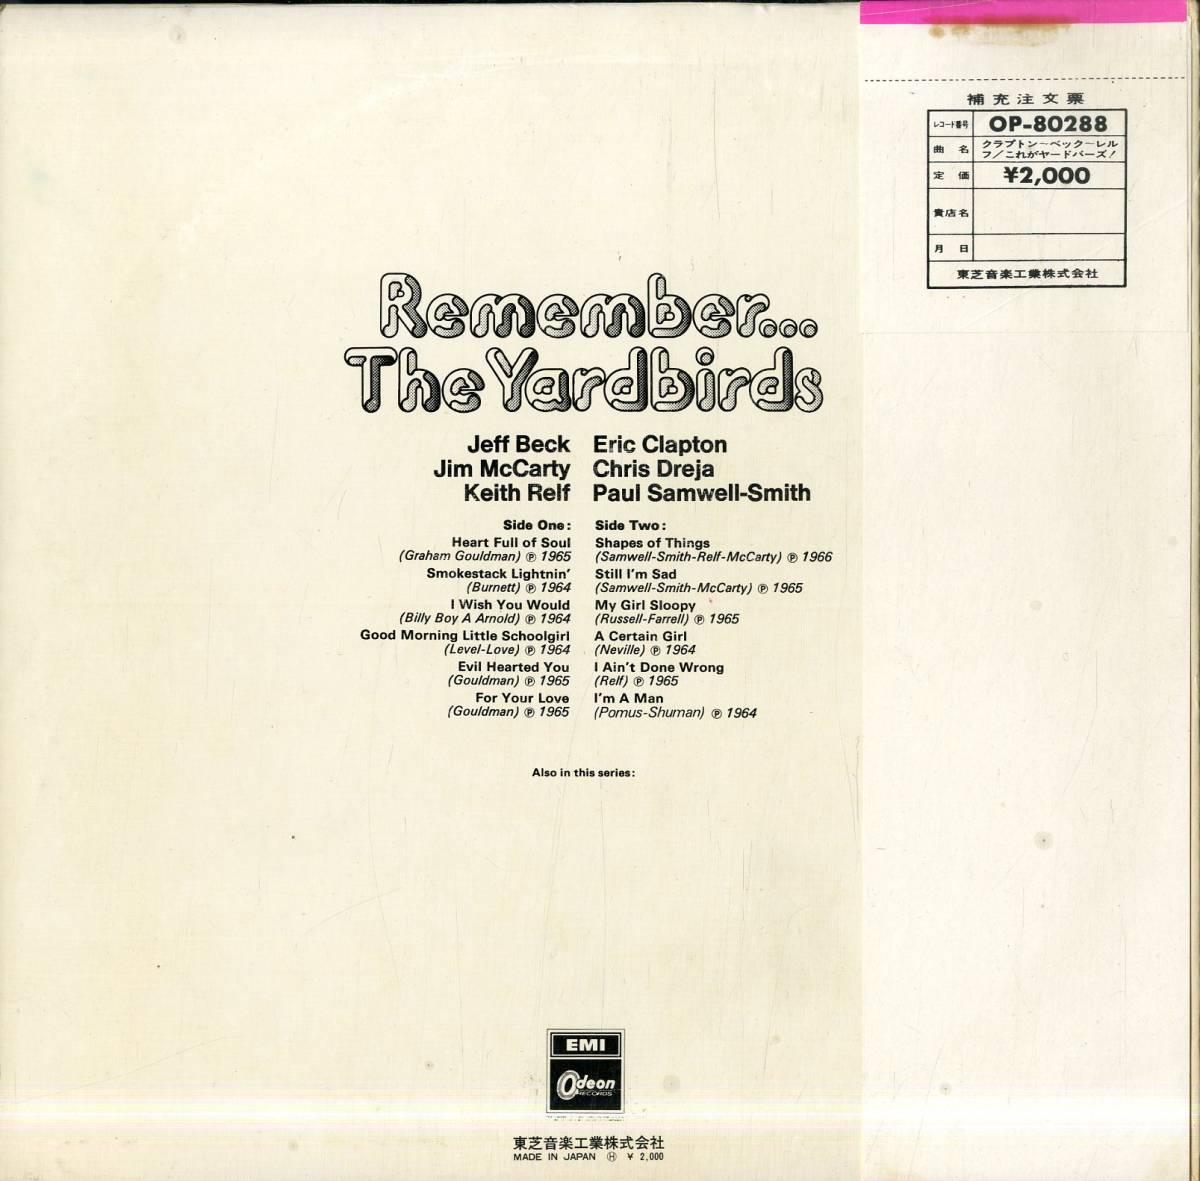 A00580637/LP/ヤードバーズ「Remember... The Yardbirds クラプトン～ベック～レルフ これがヤードバーズ! (1971年・OP-80288・ブルース_画像2